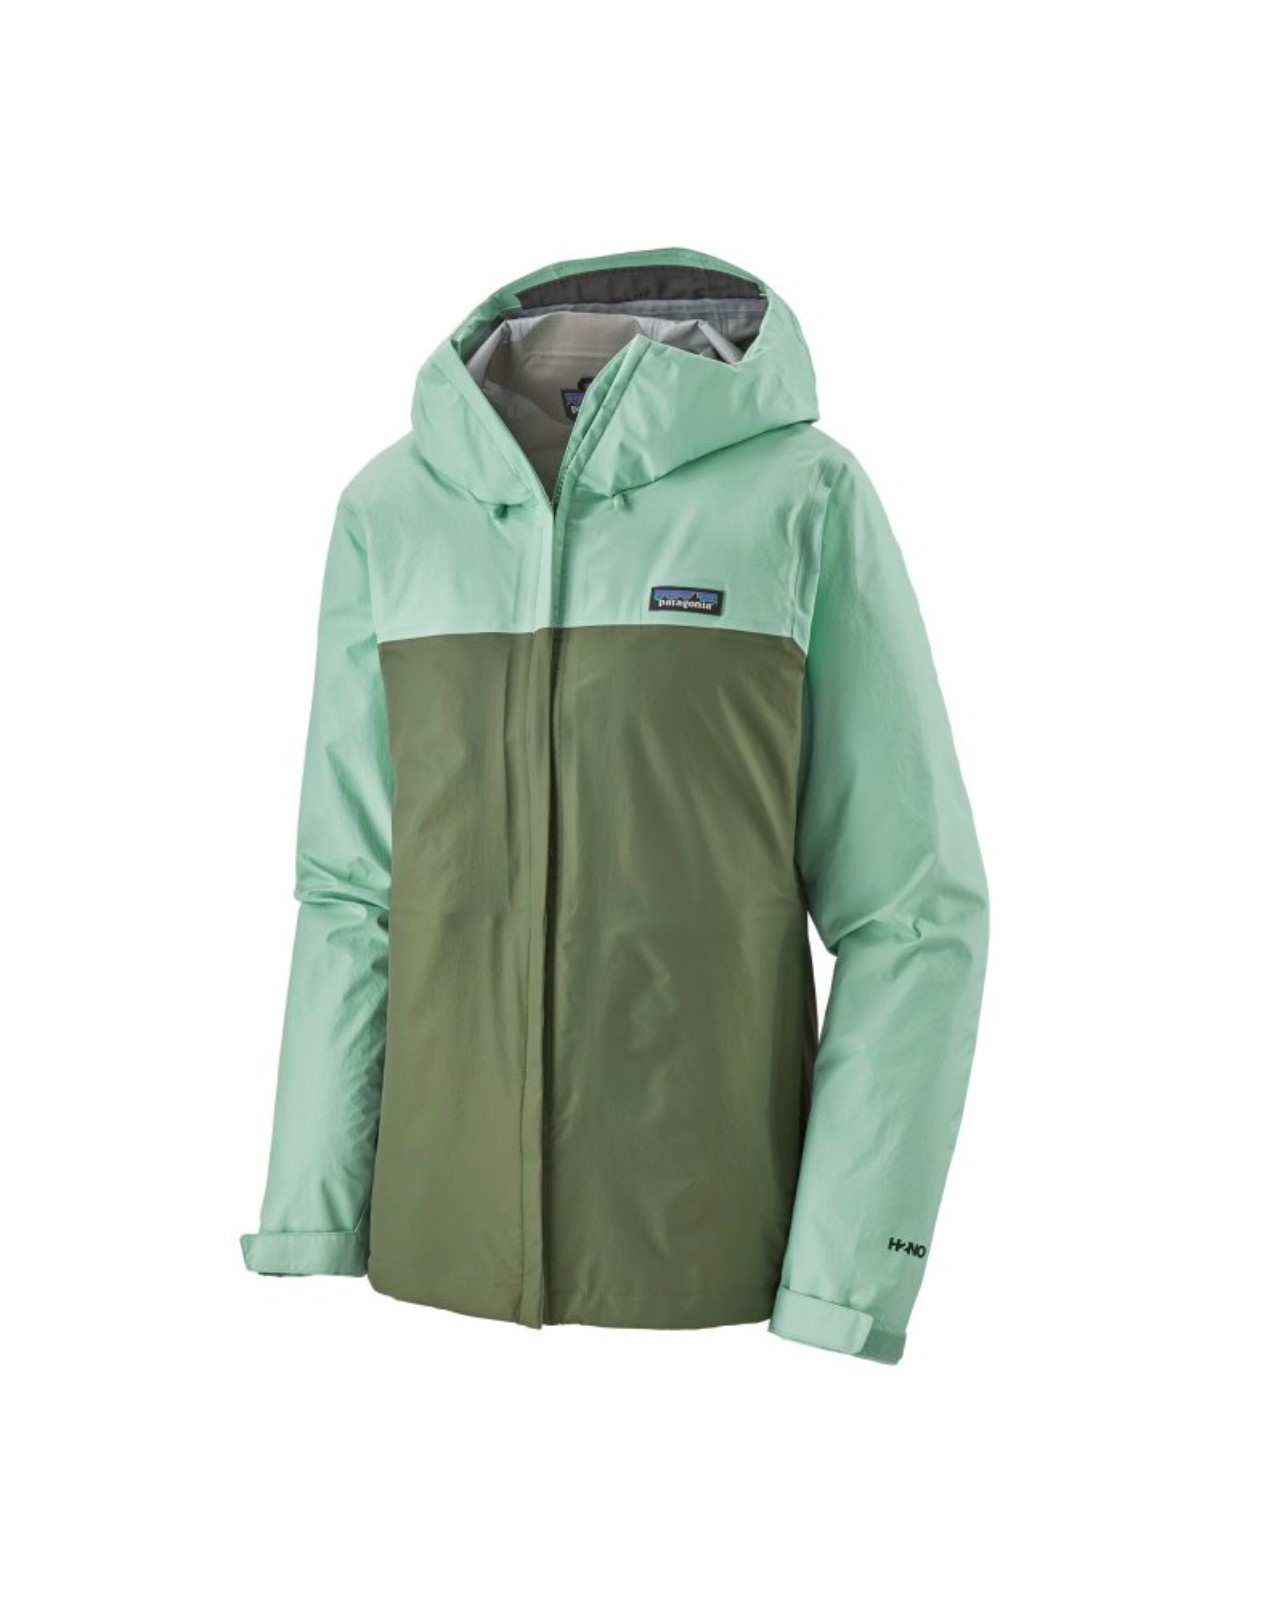 Patagonia W's Torrentshell 3L Jacket - Gypsum Green - XS